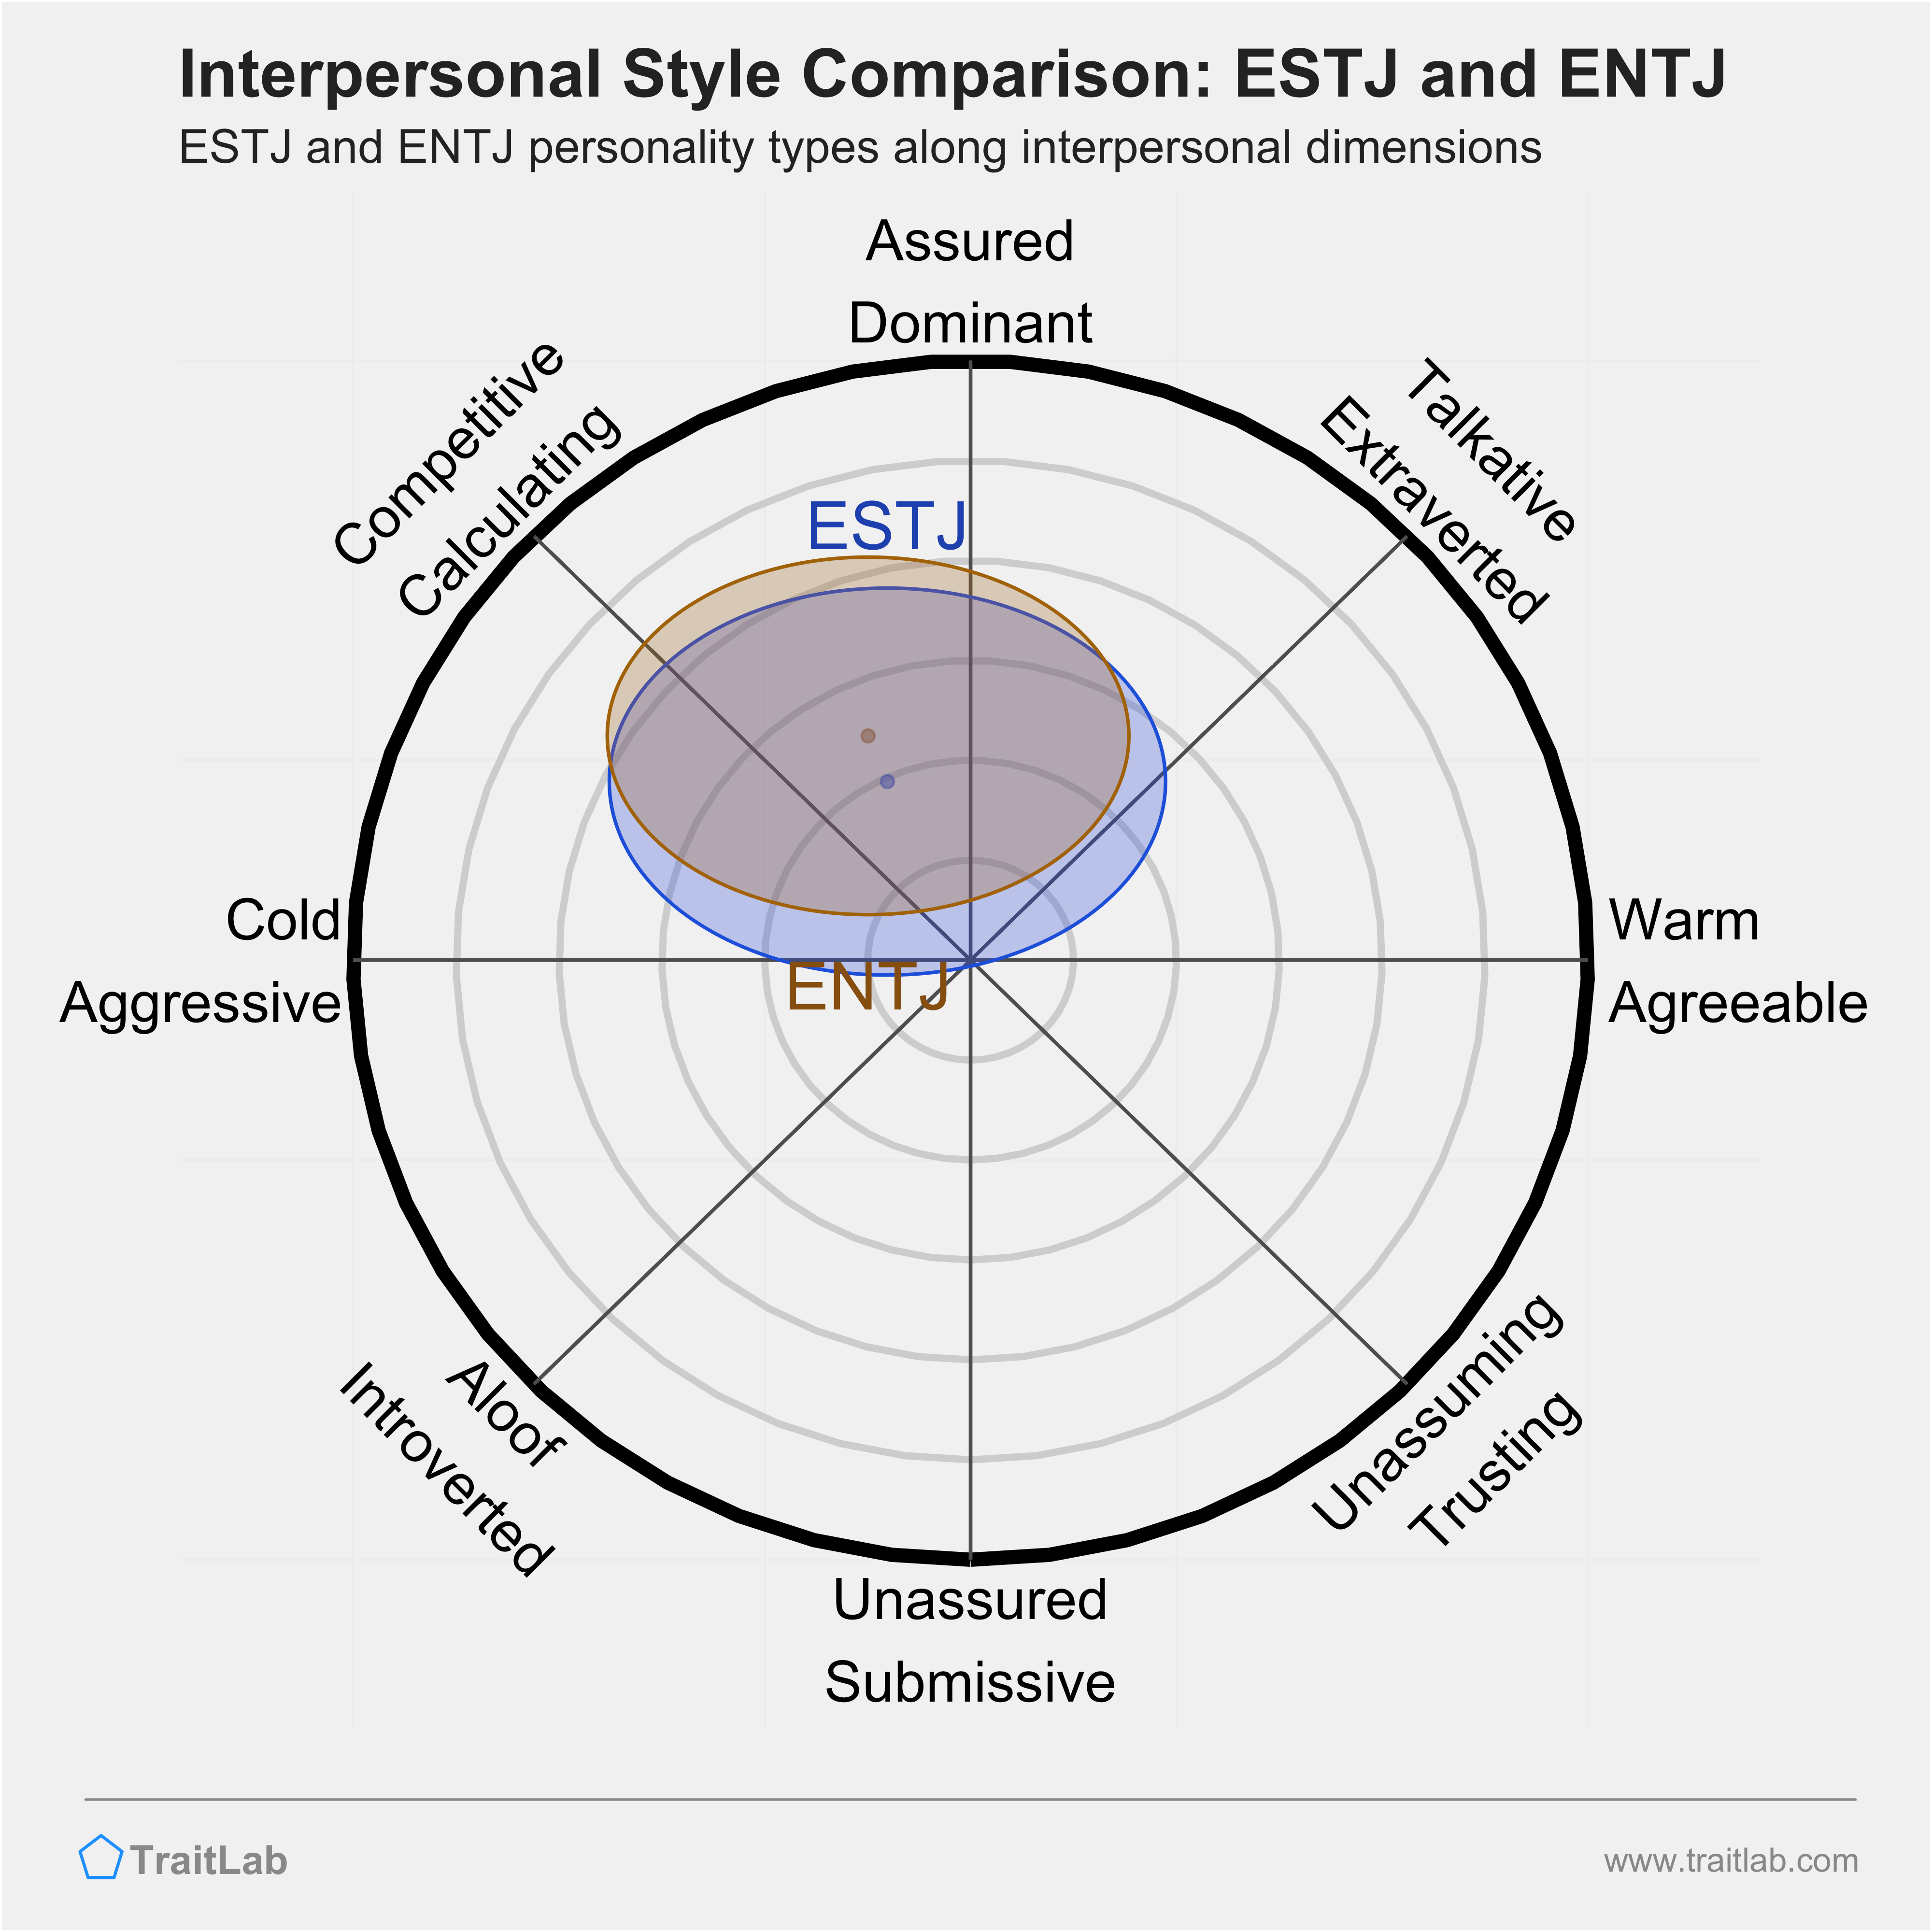 ESTJ and ENTJ comparison across interpersonal dimensions